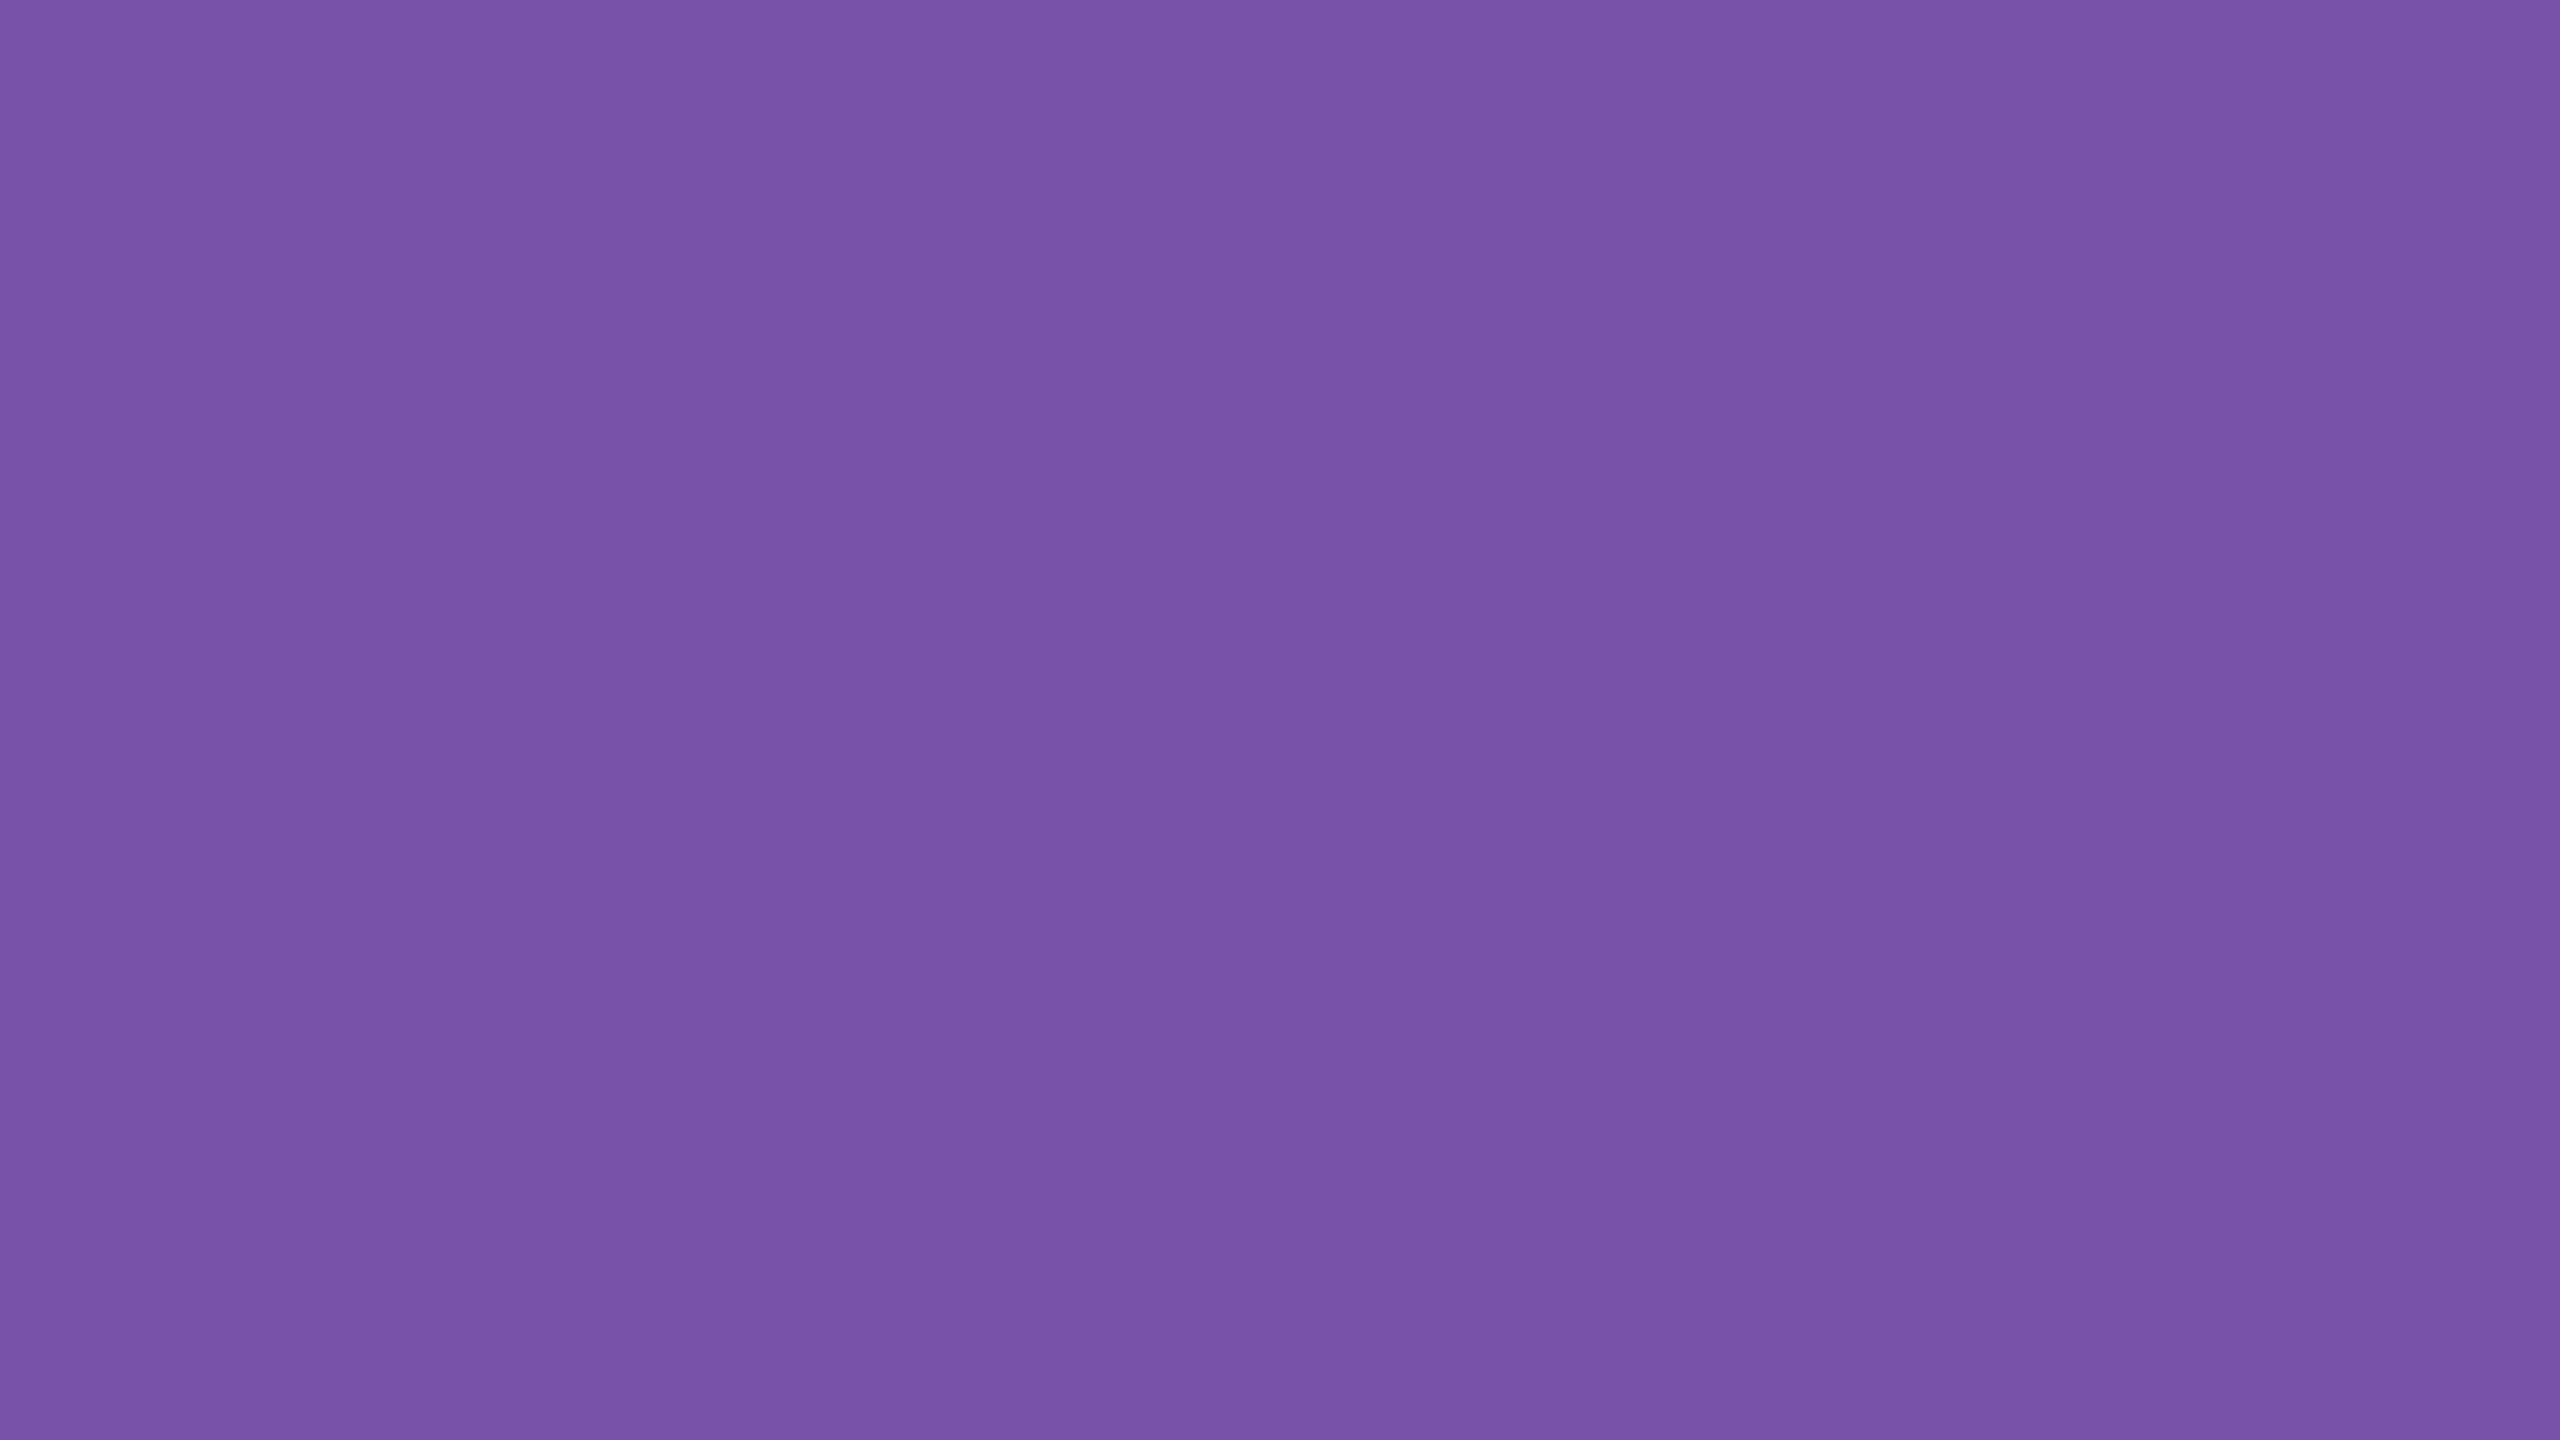 Purple Background Plain - 210+ Amazing Purple Backgrounds | Backgrounds ...